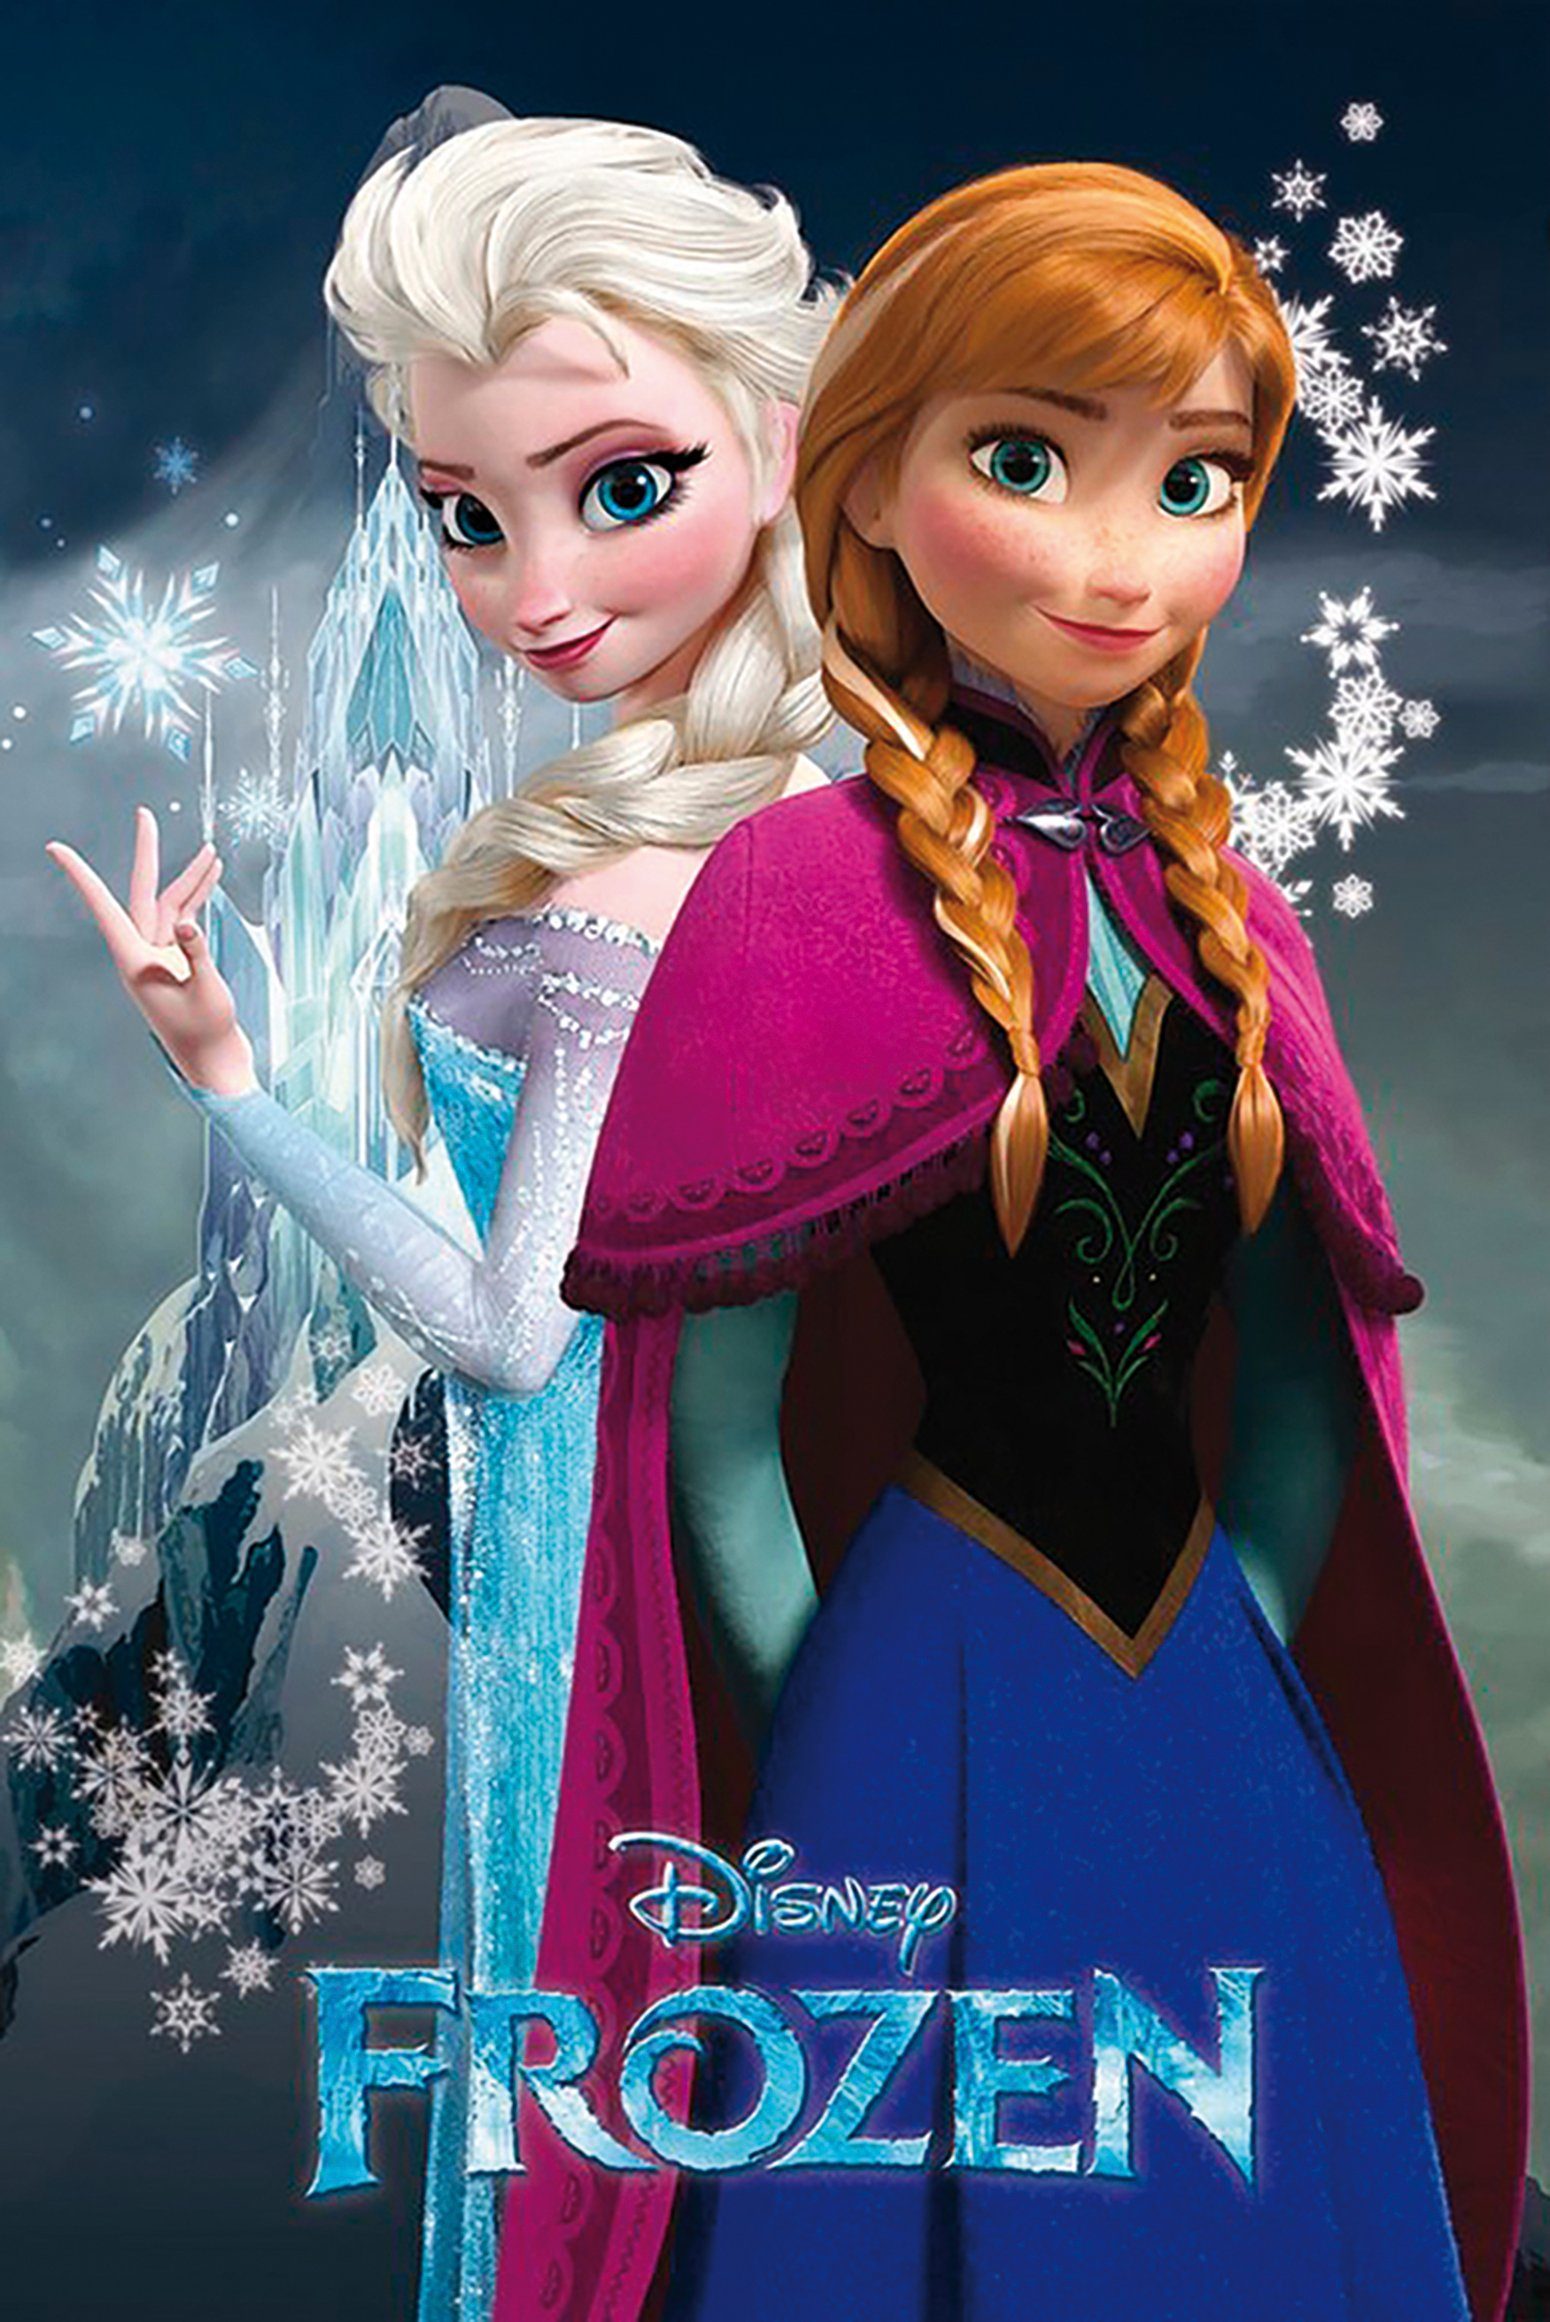 cm 2 61 Anna Elsa & Frozen Poster x Poster Grupo Erik 91,5